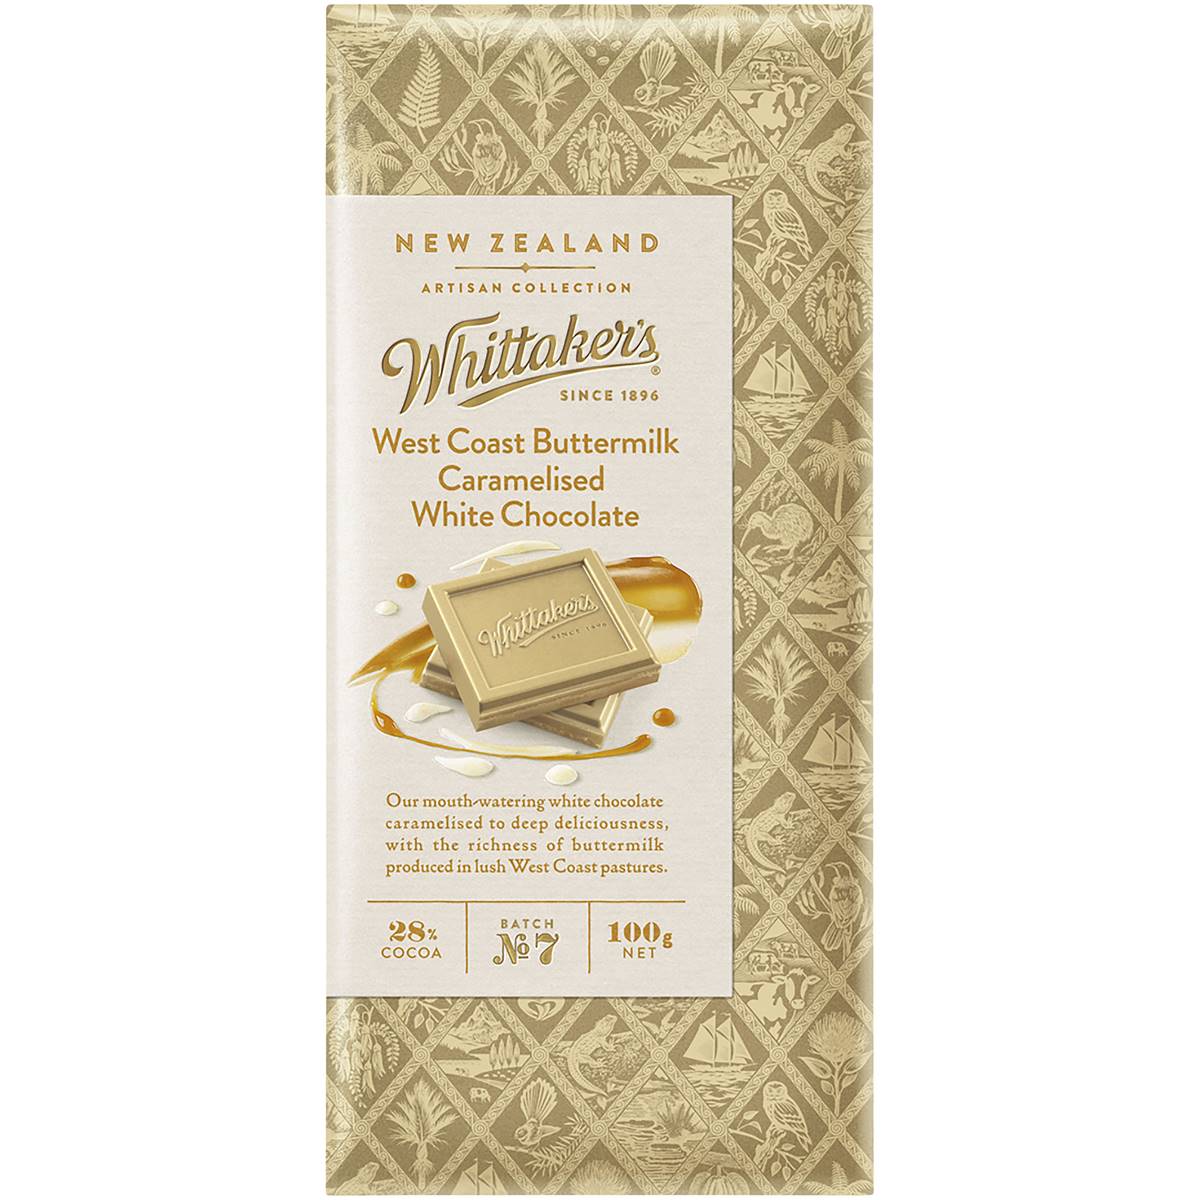 Calories in Whittaker's Artisan West Coast Buttermilk Caramel 28% Cocoa